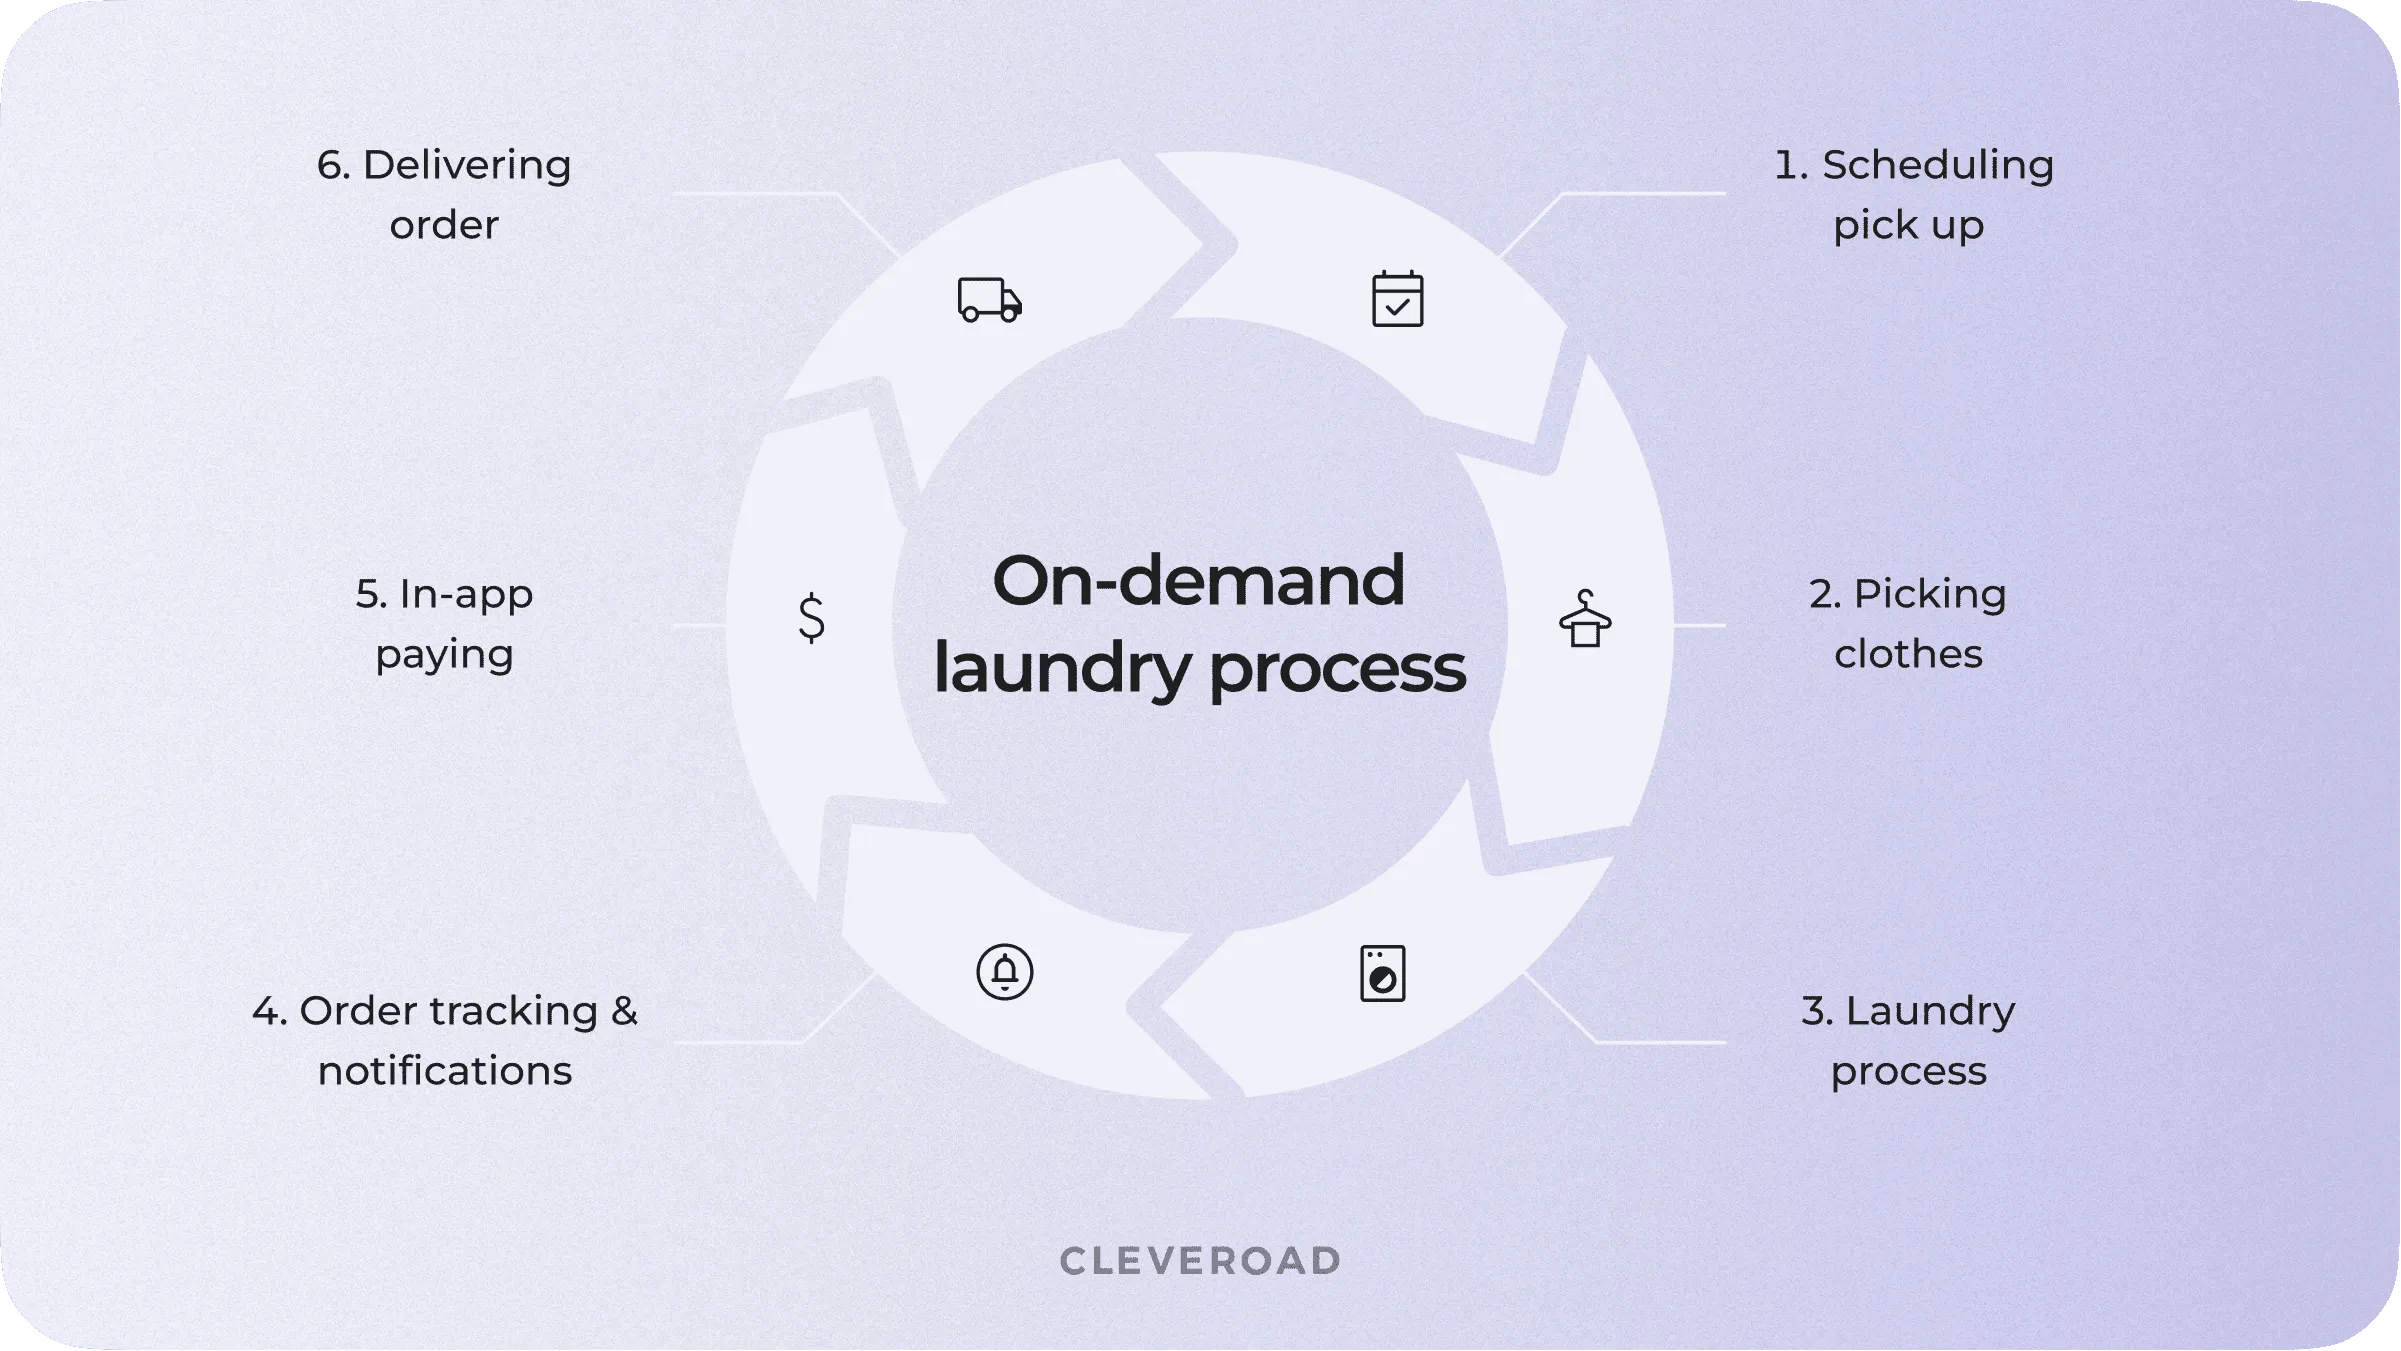 On-demand laundry process